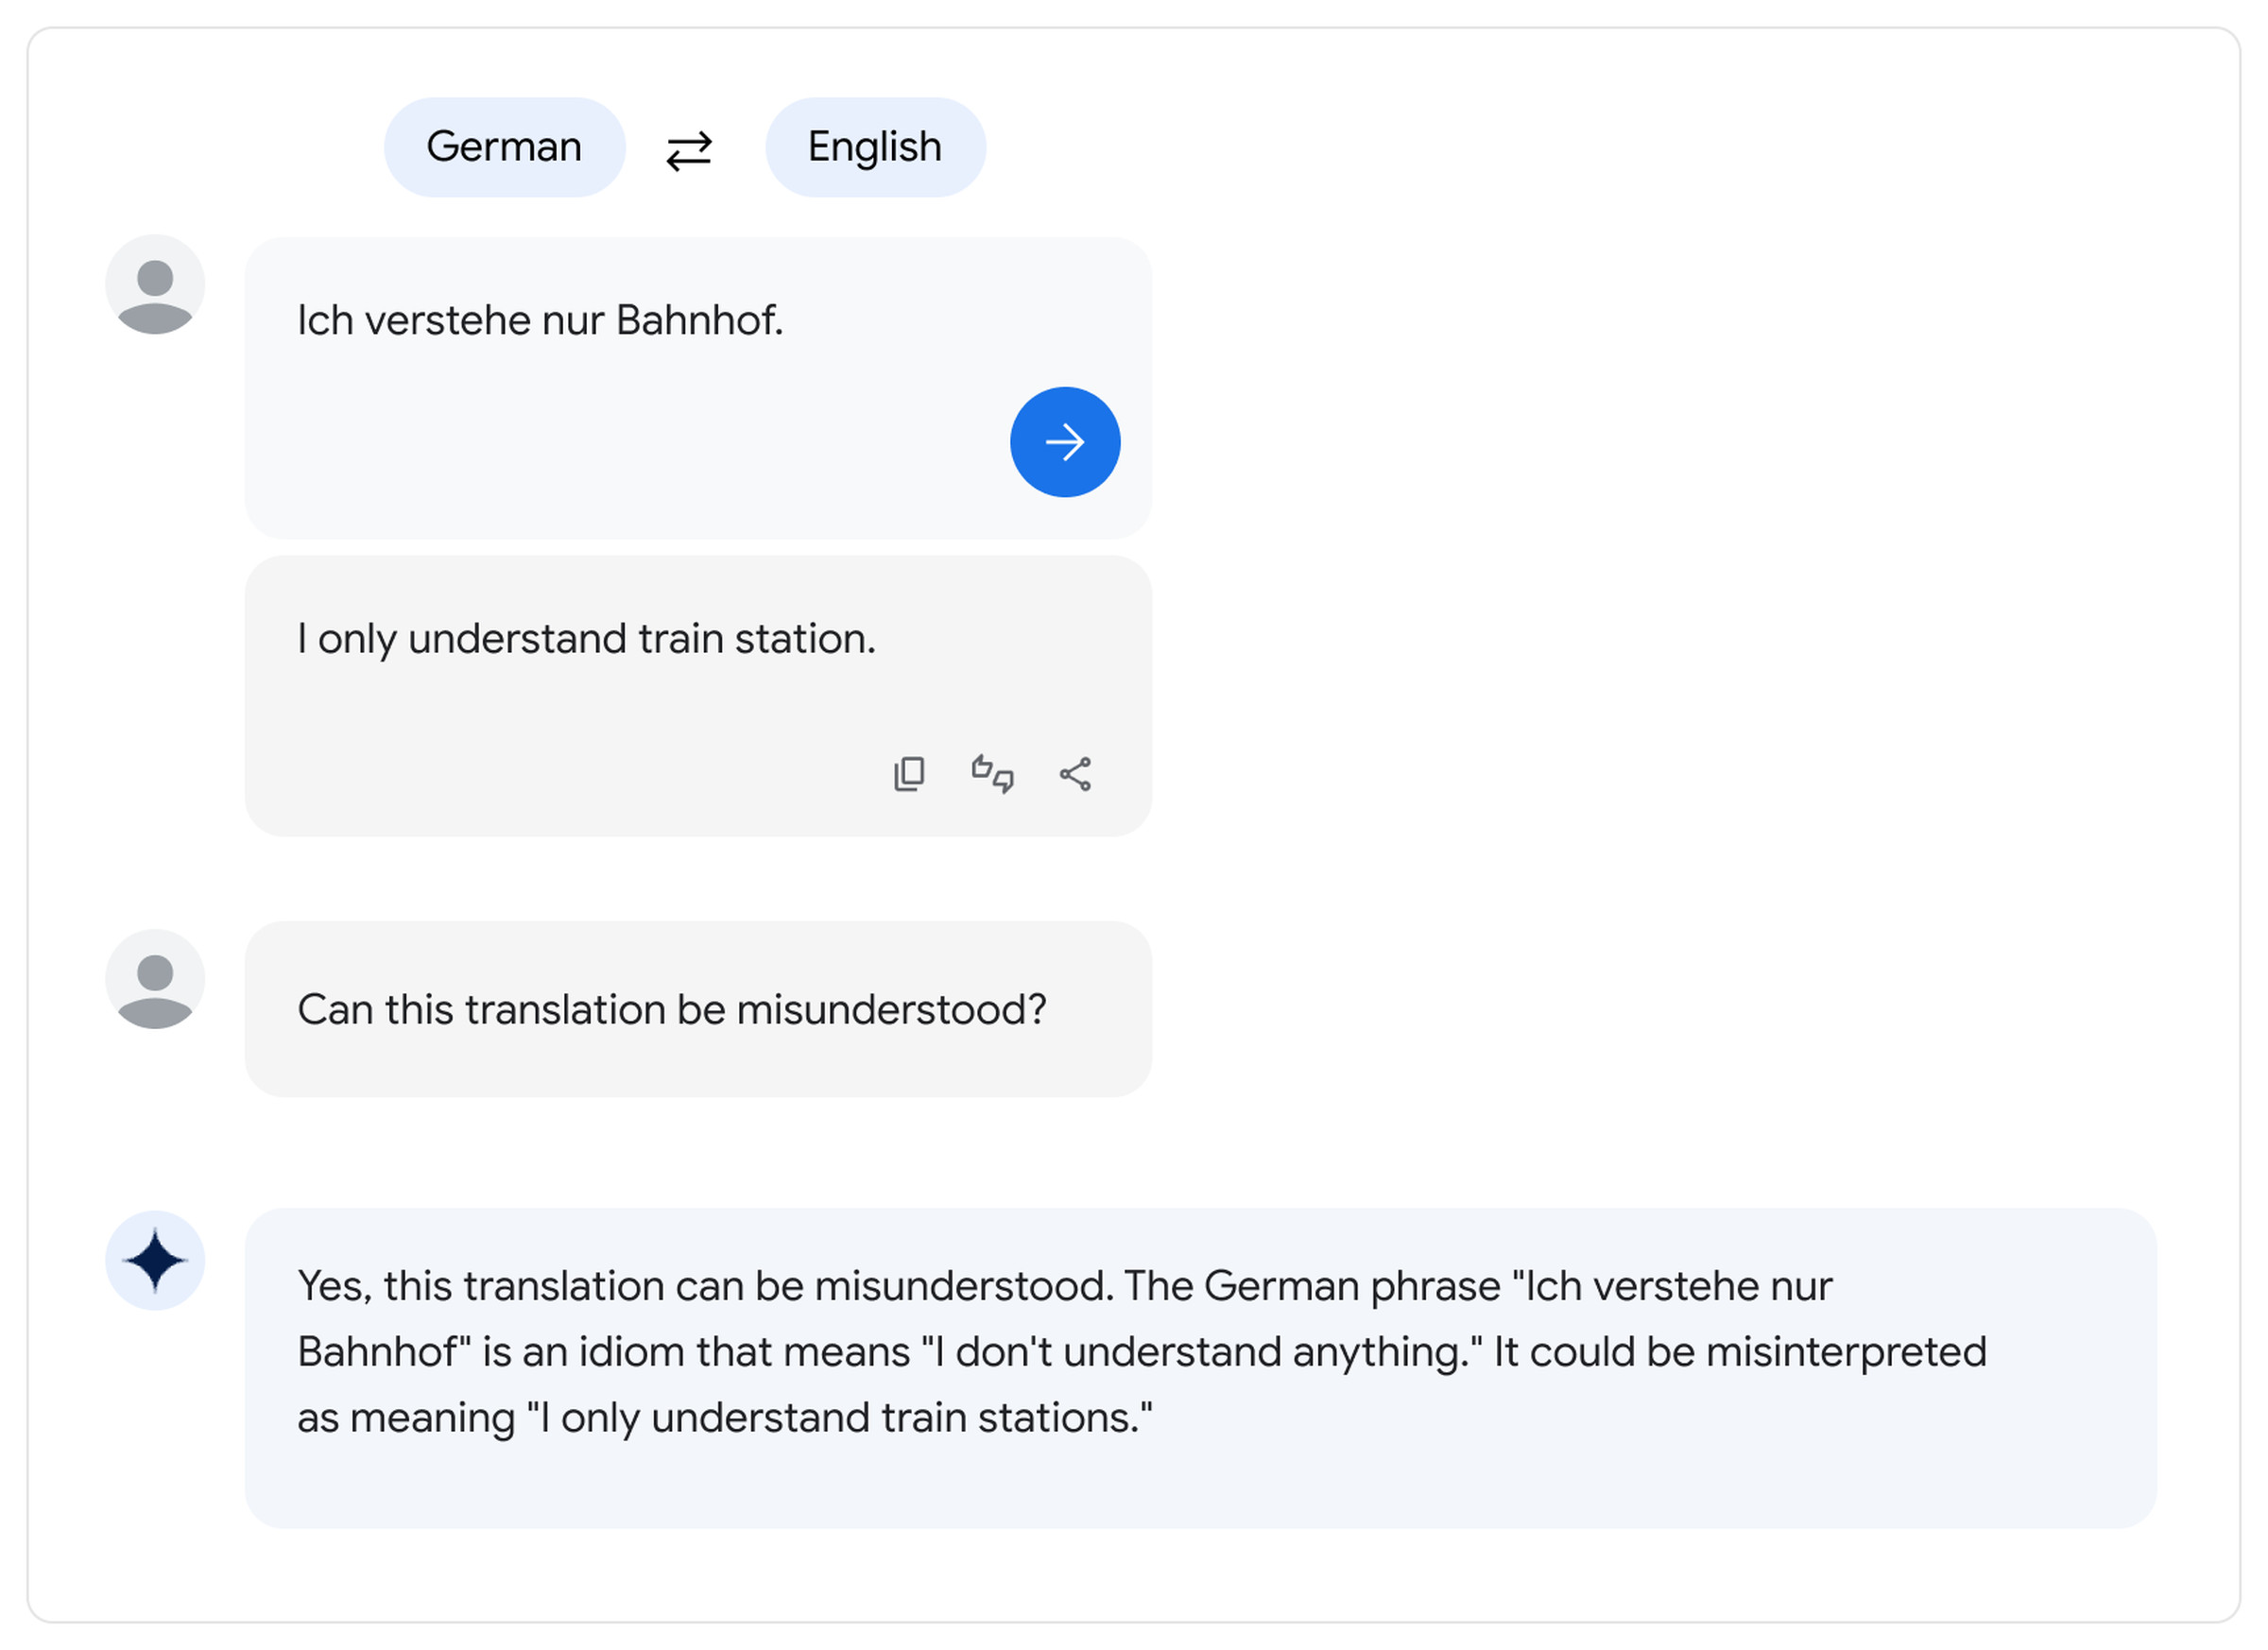 A screenshot showing PaLM 2 translating the German phrase “Ich verstehe nur Bahnhof.”